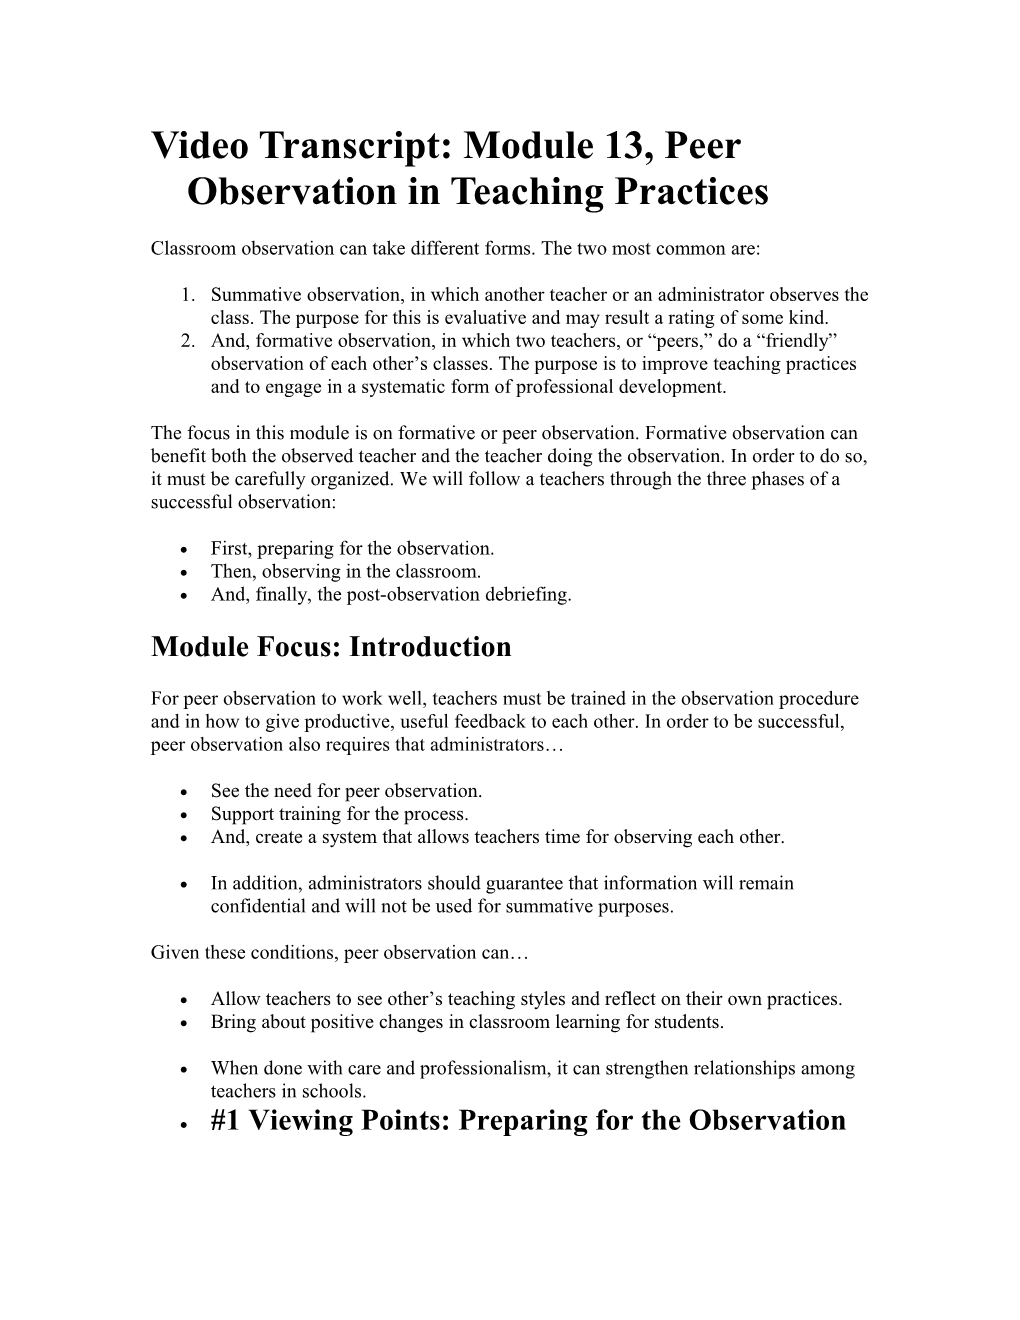 Video Transcript: Module 13, Peer Observation in Teaching Practices